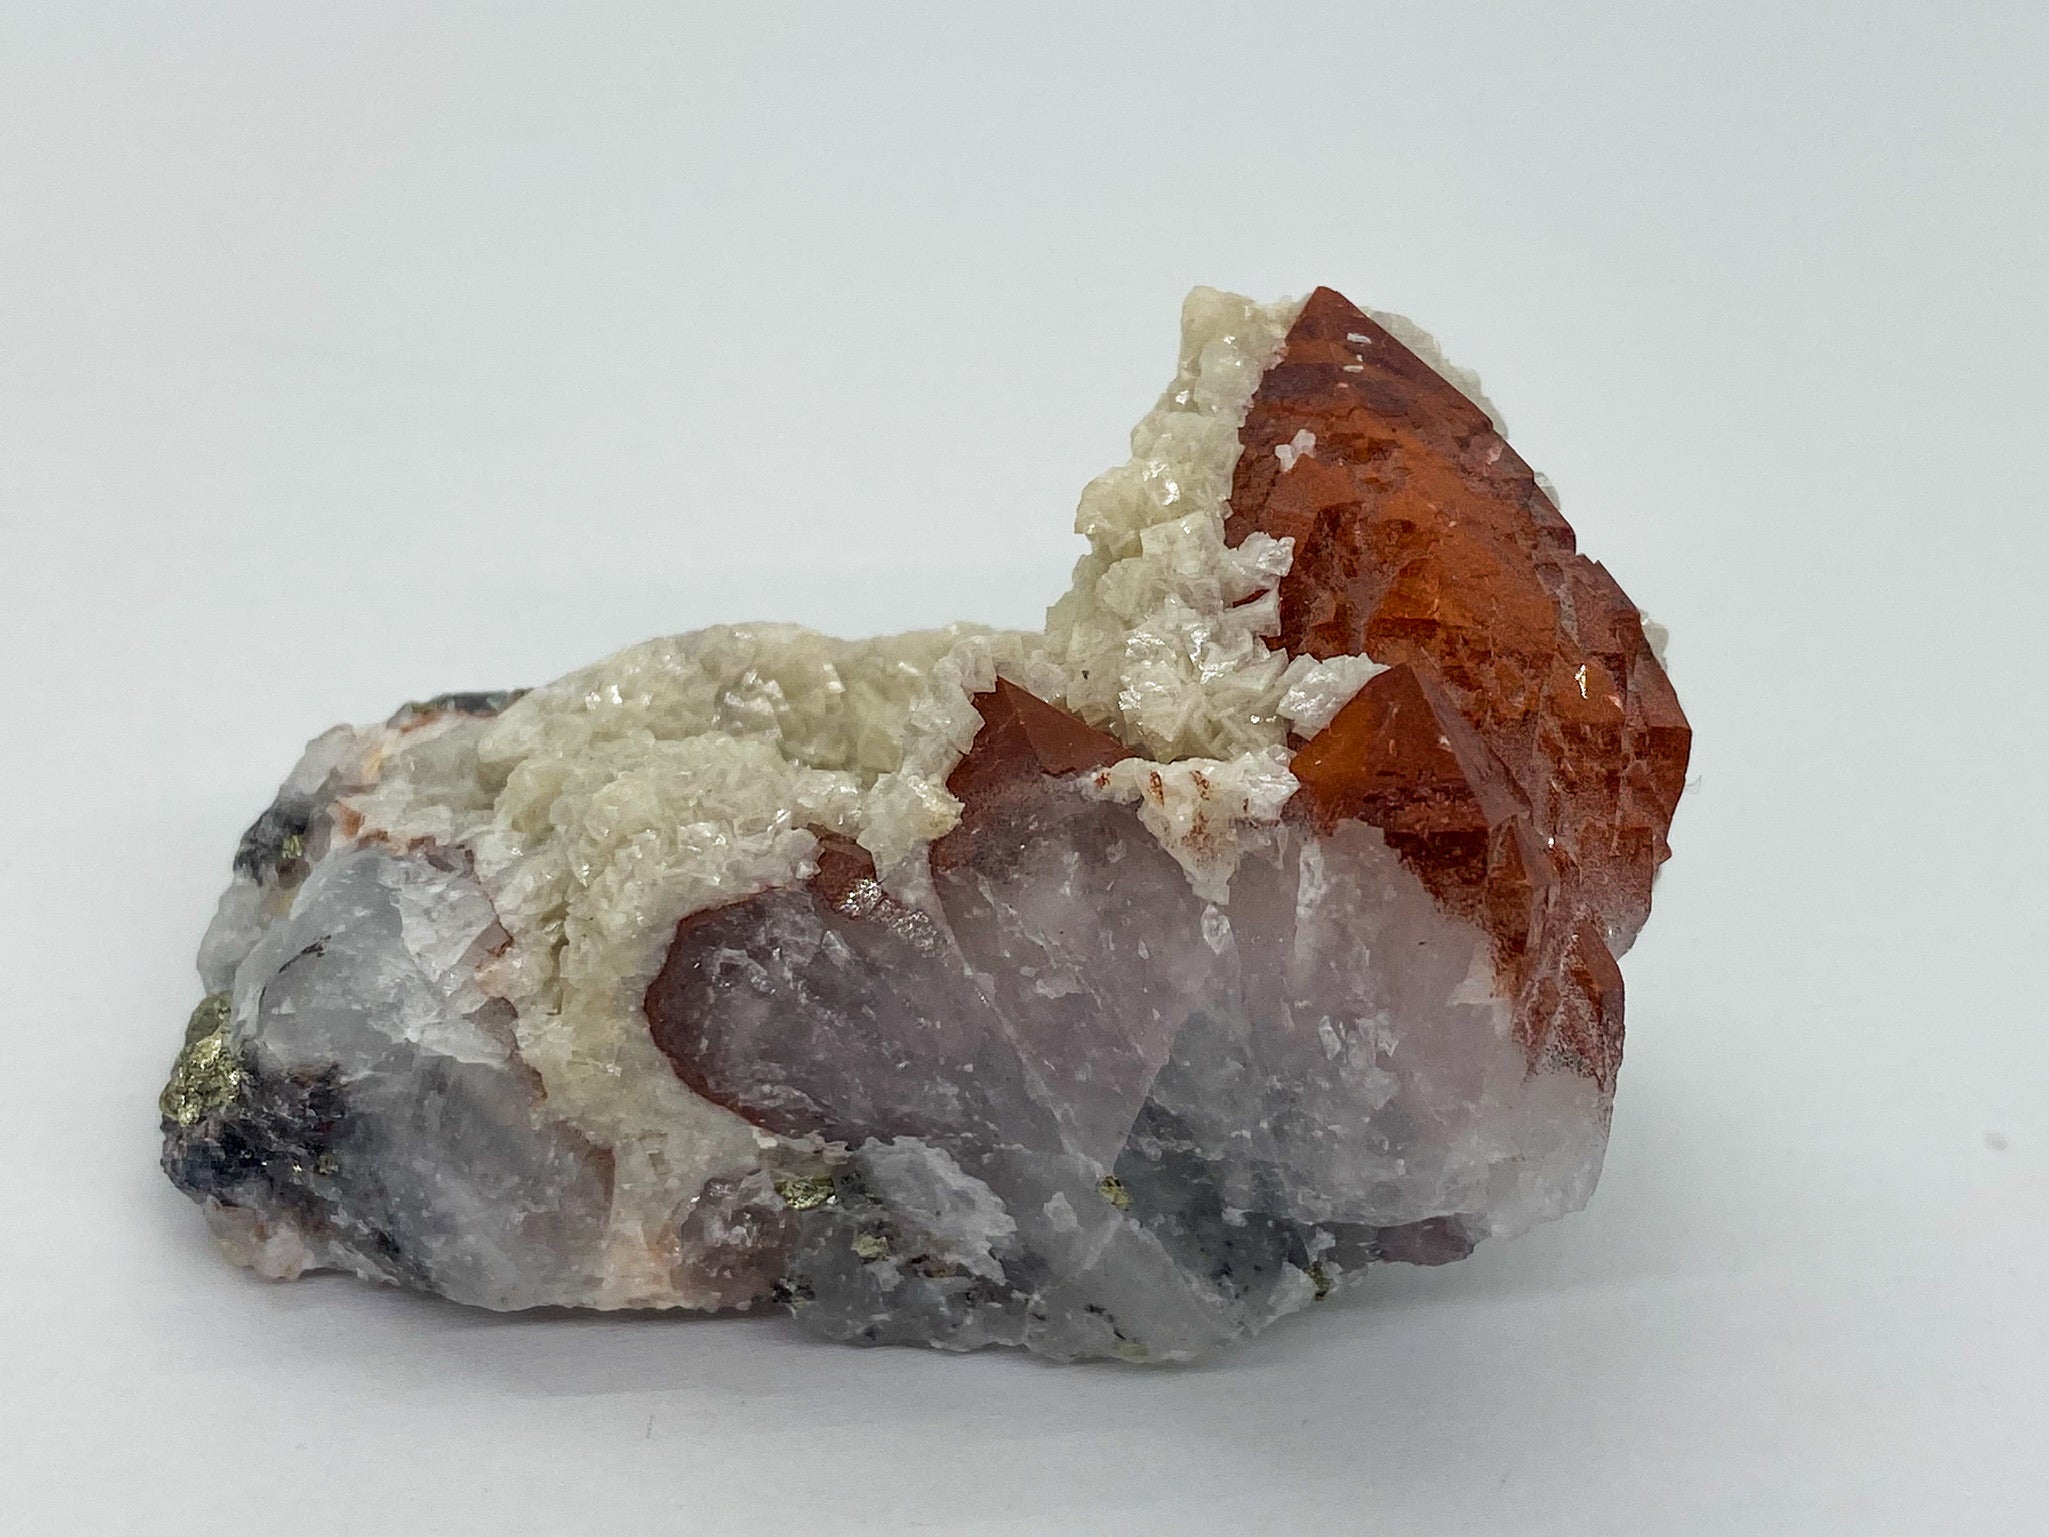 Druzy Quartz with Arsenal Pyrite